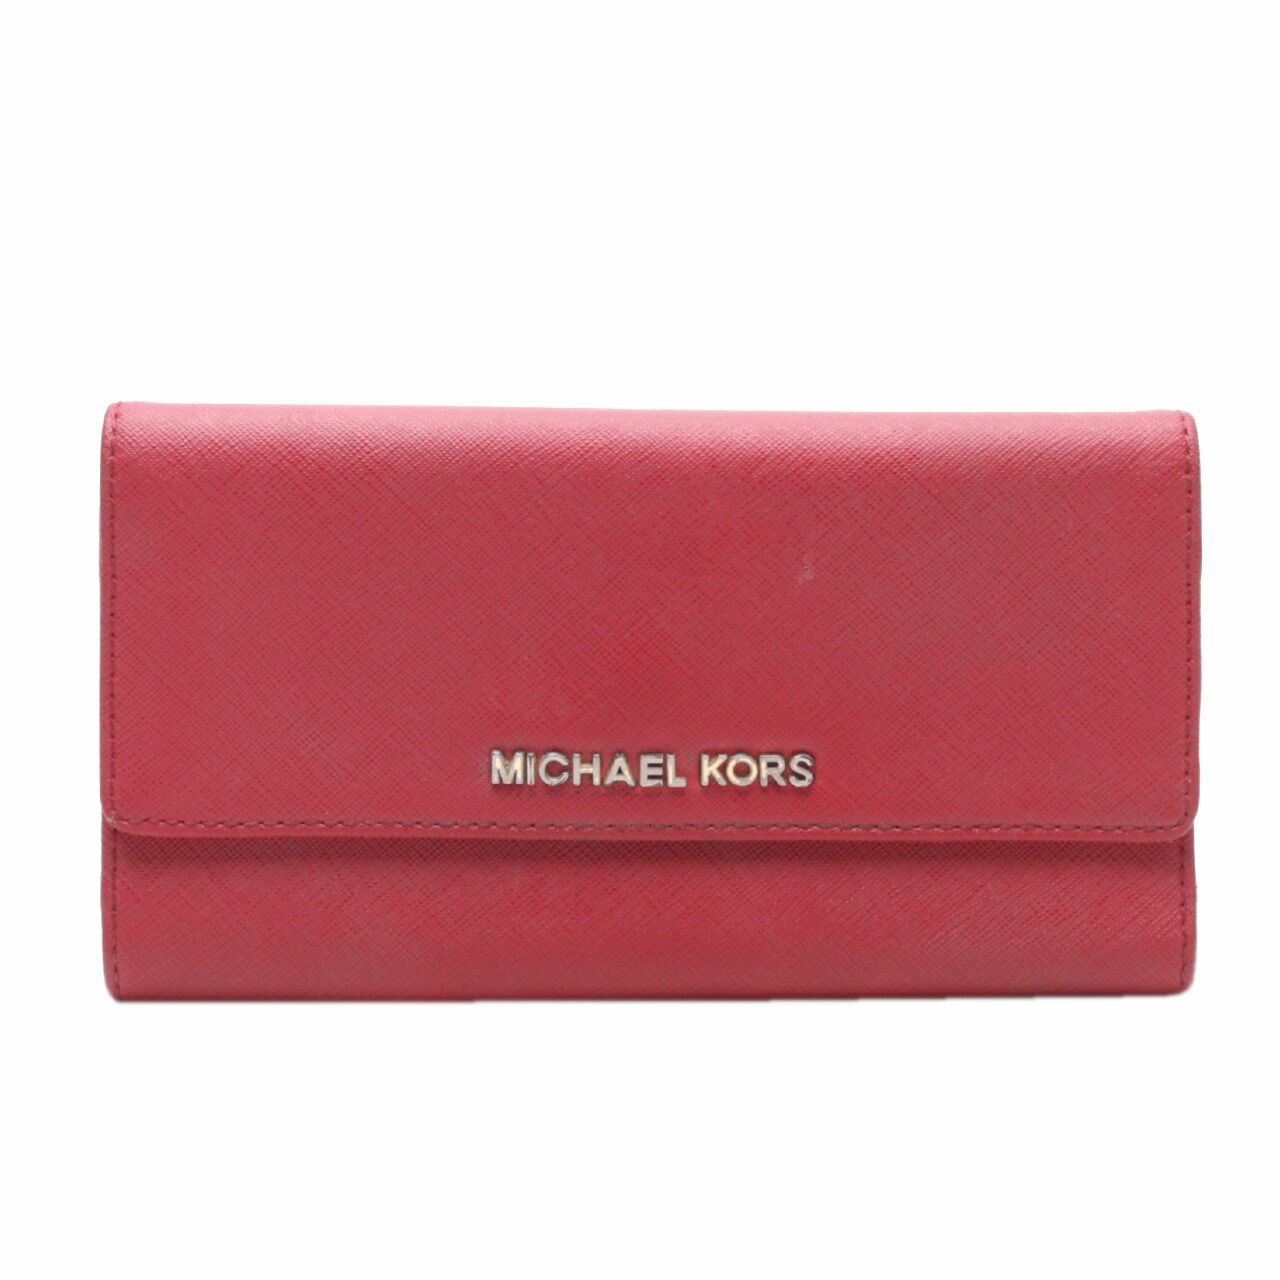 Michael Kors Jet Set Travel Wallet 